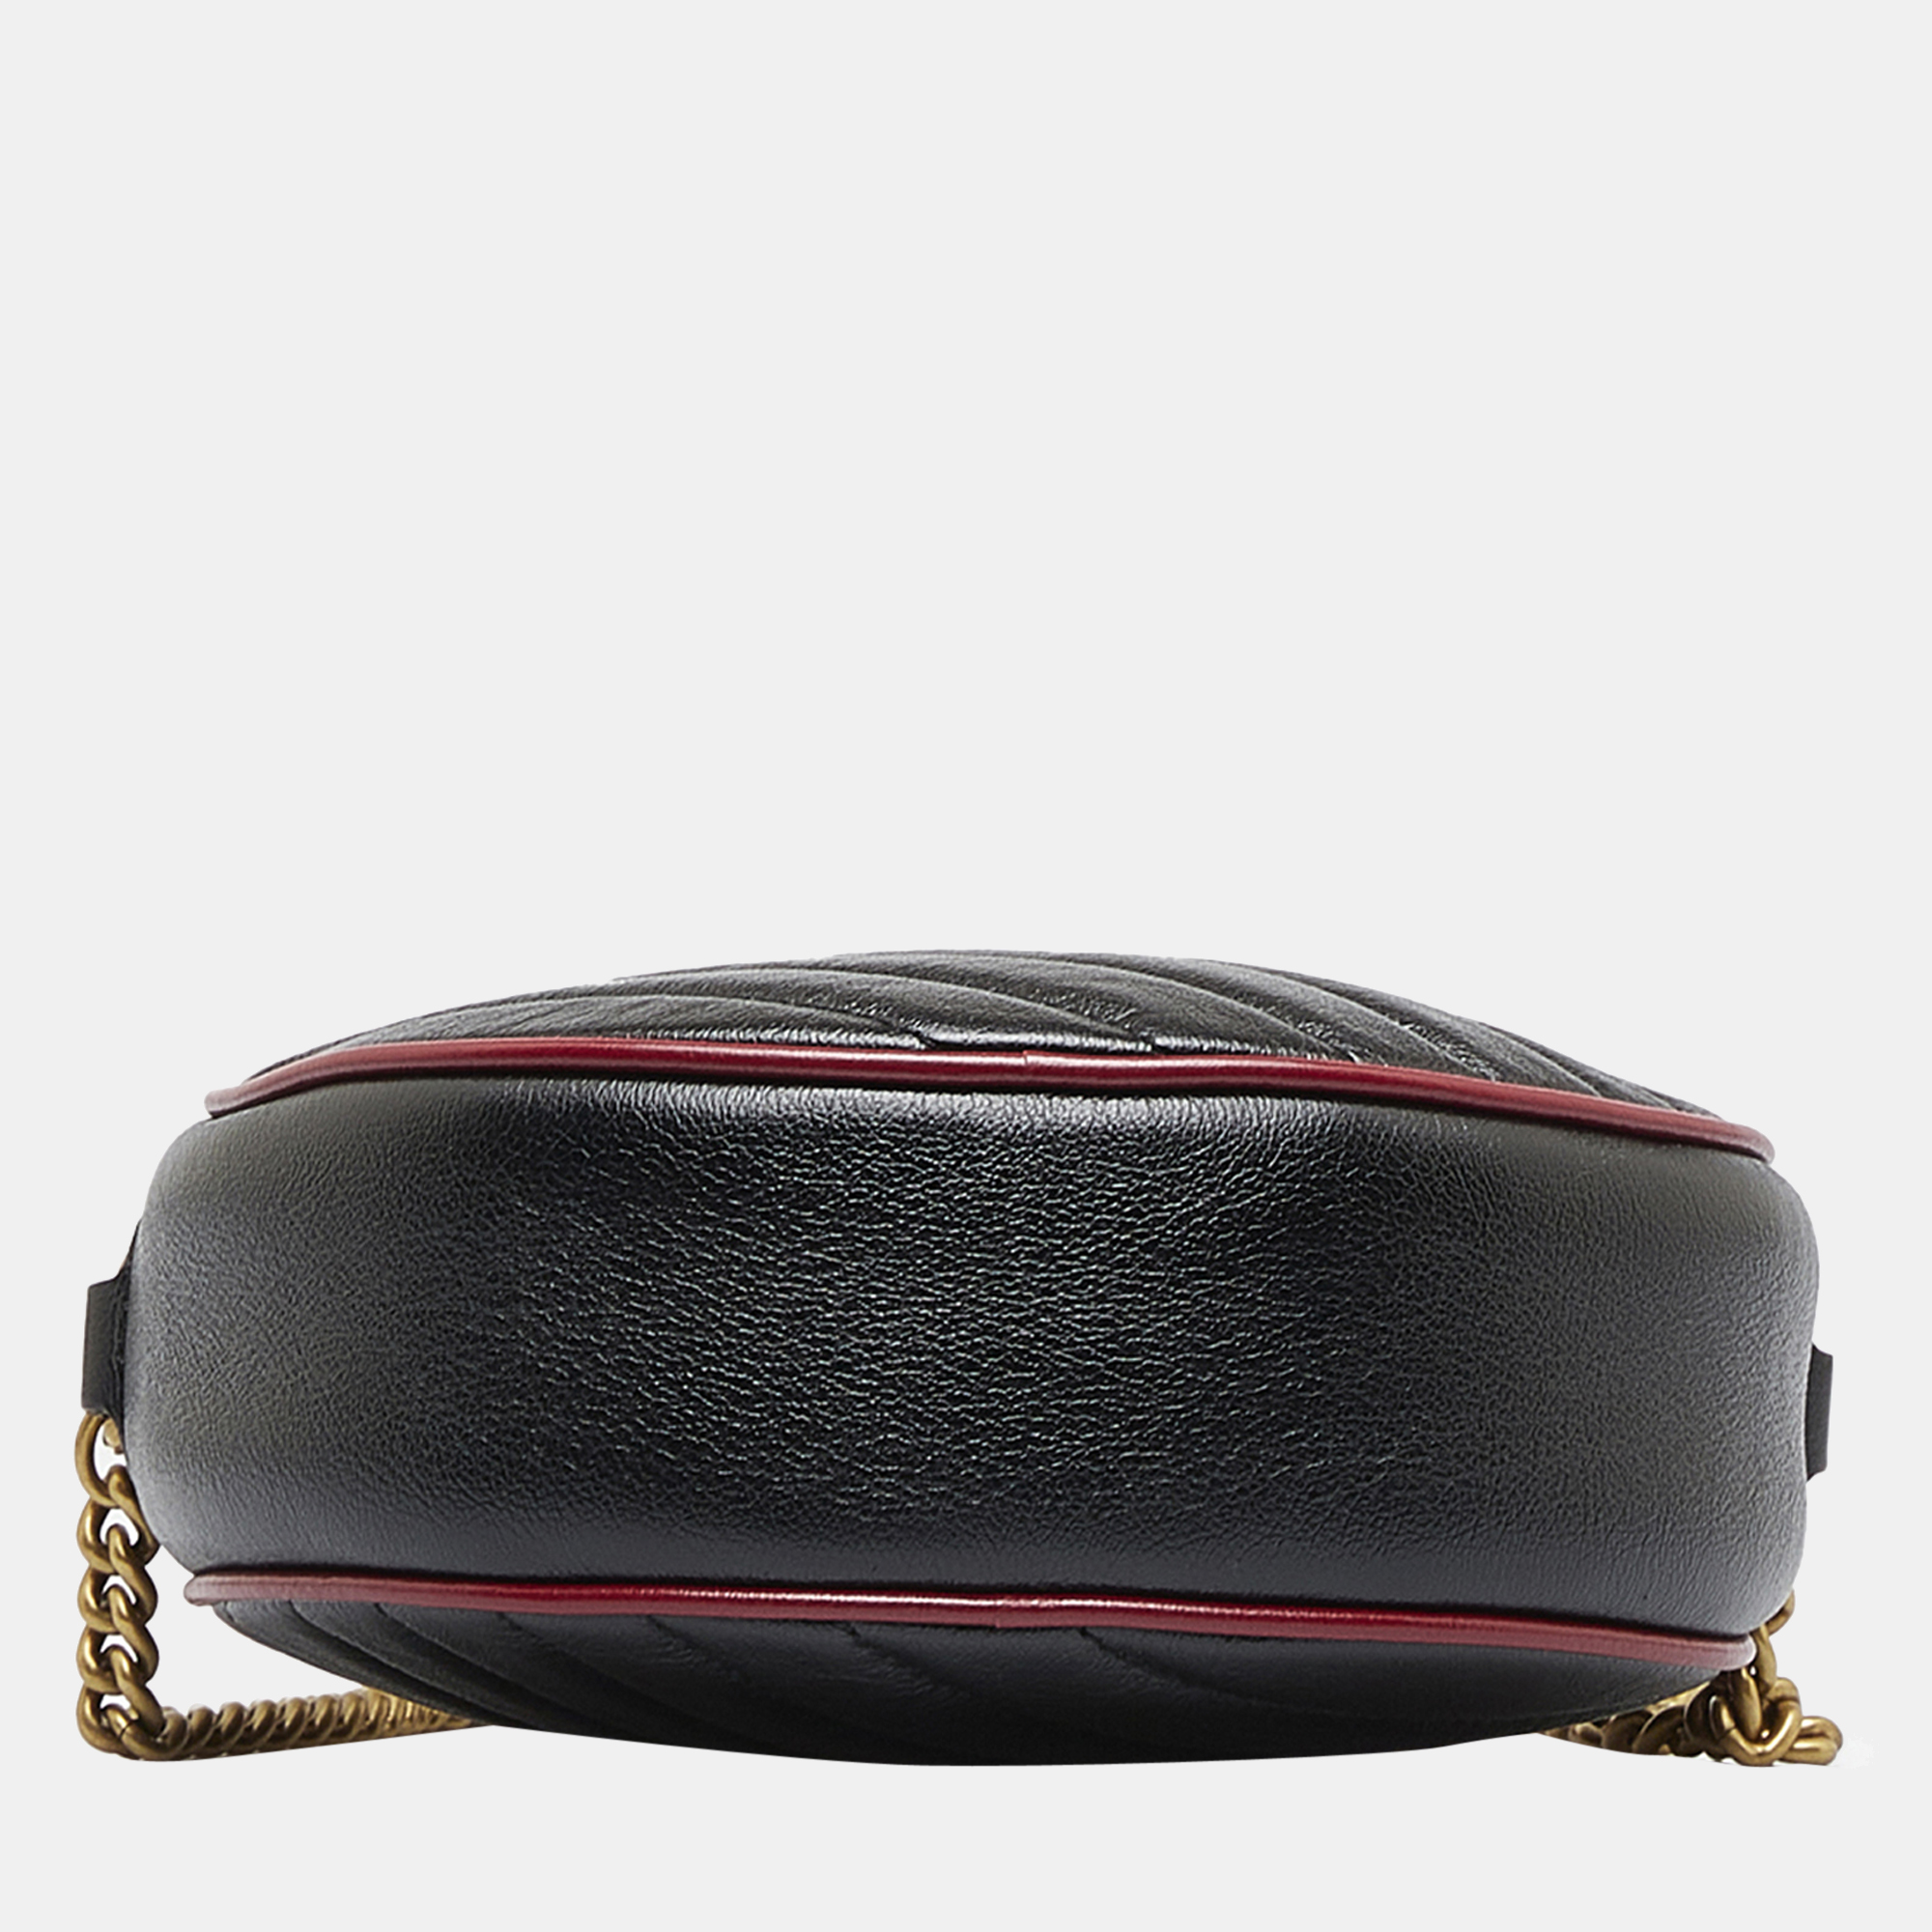 Gucci Black,Red Mini Torchon GG Marmont Round Crossbody Bag